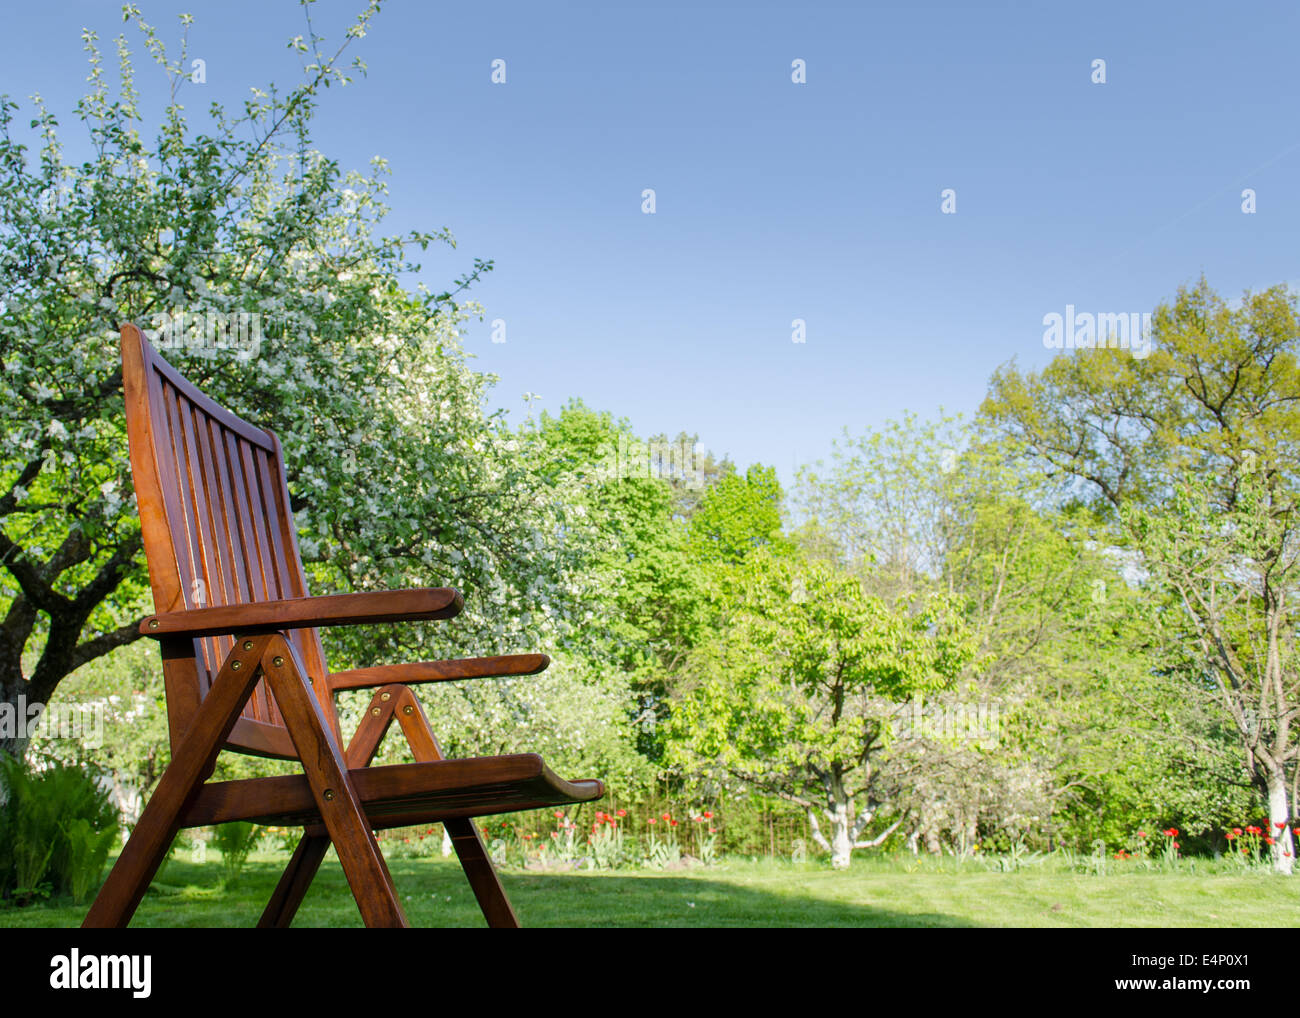 brown wooden garden chair outdoors on spring garden tree background Stock Photo